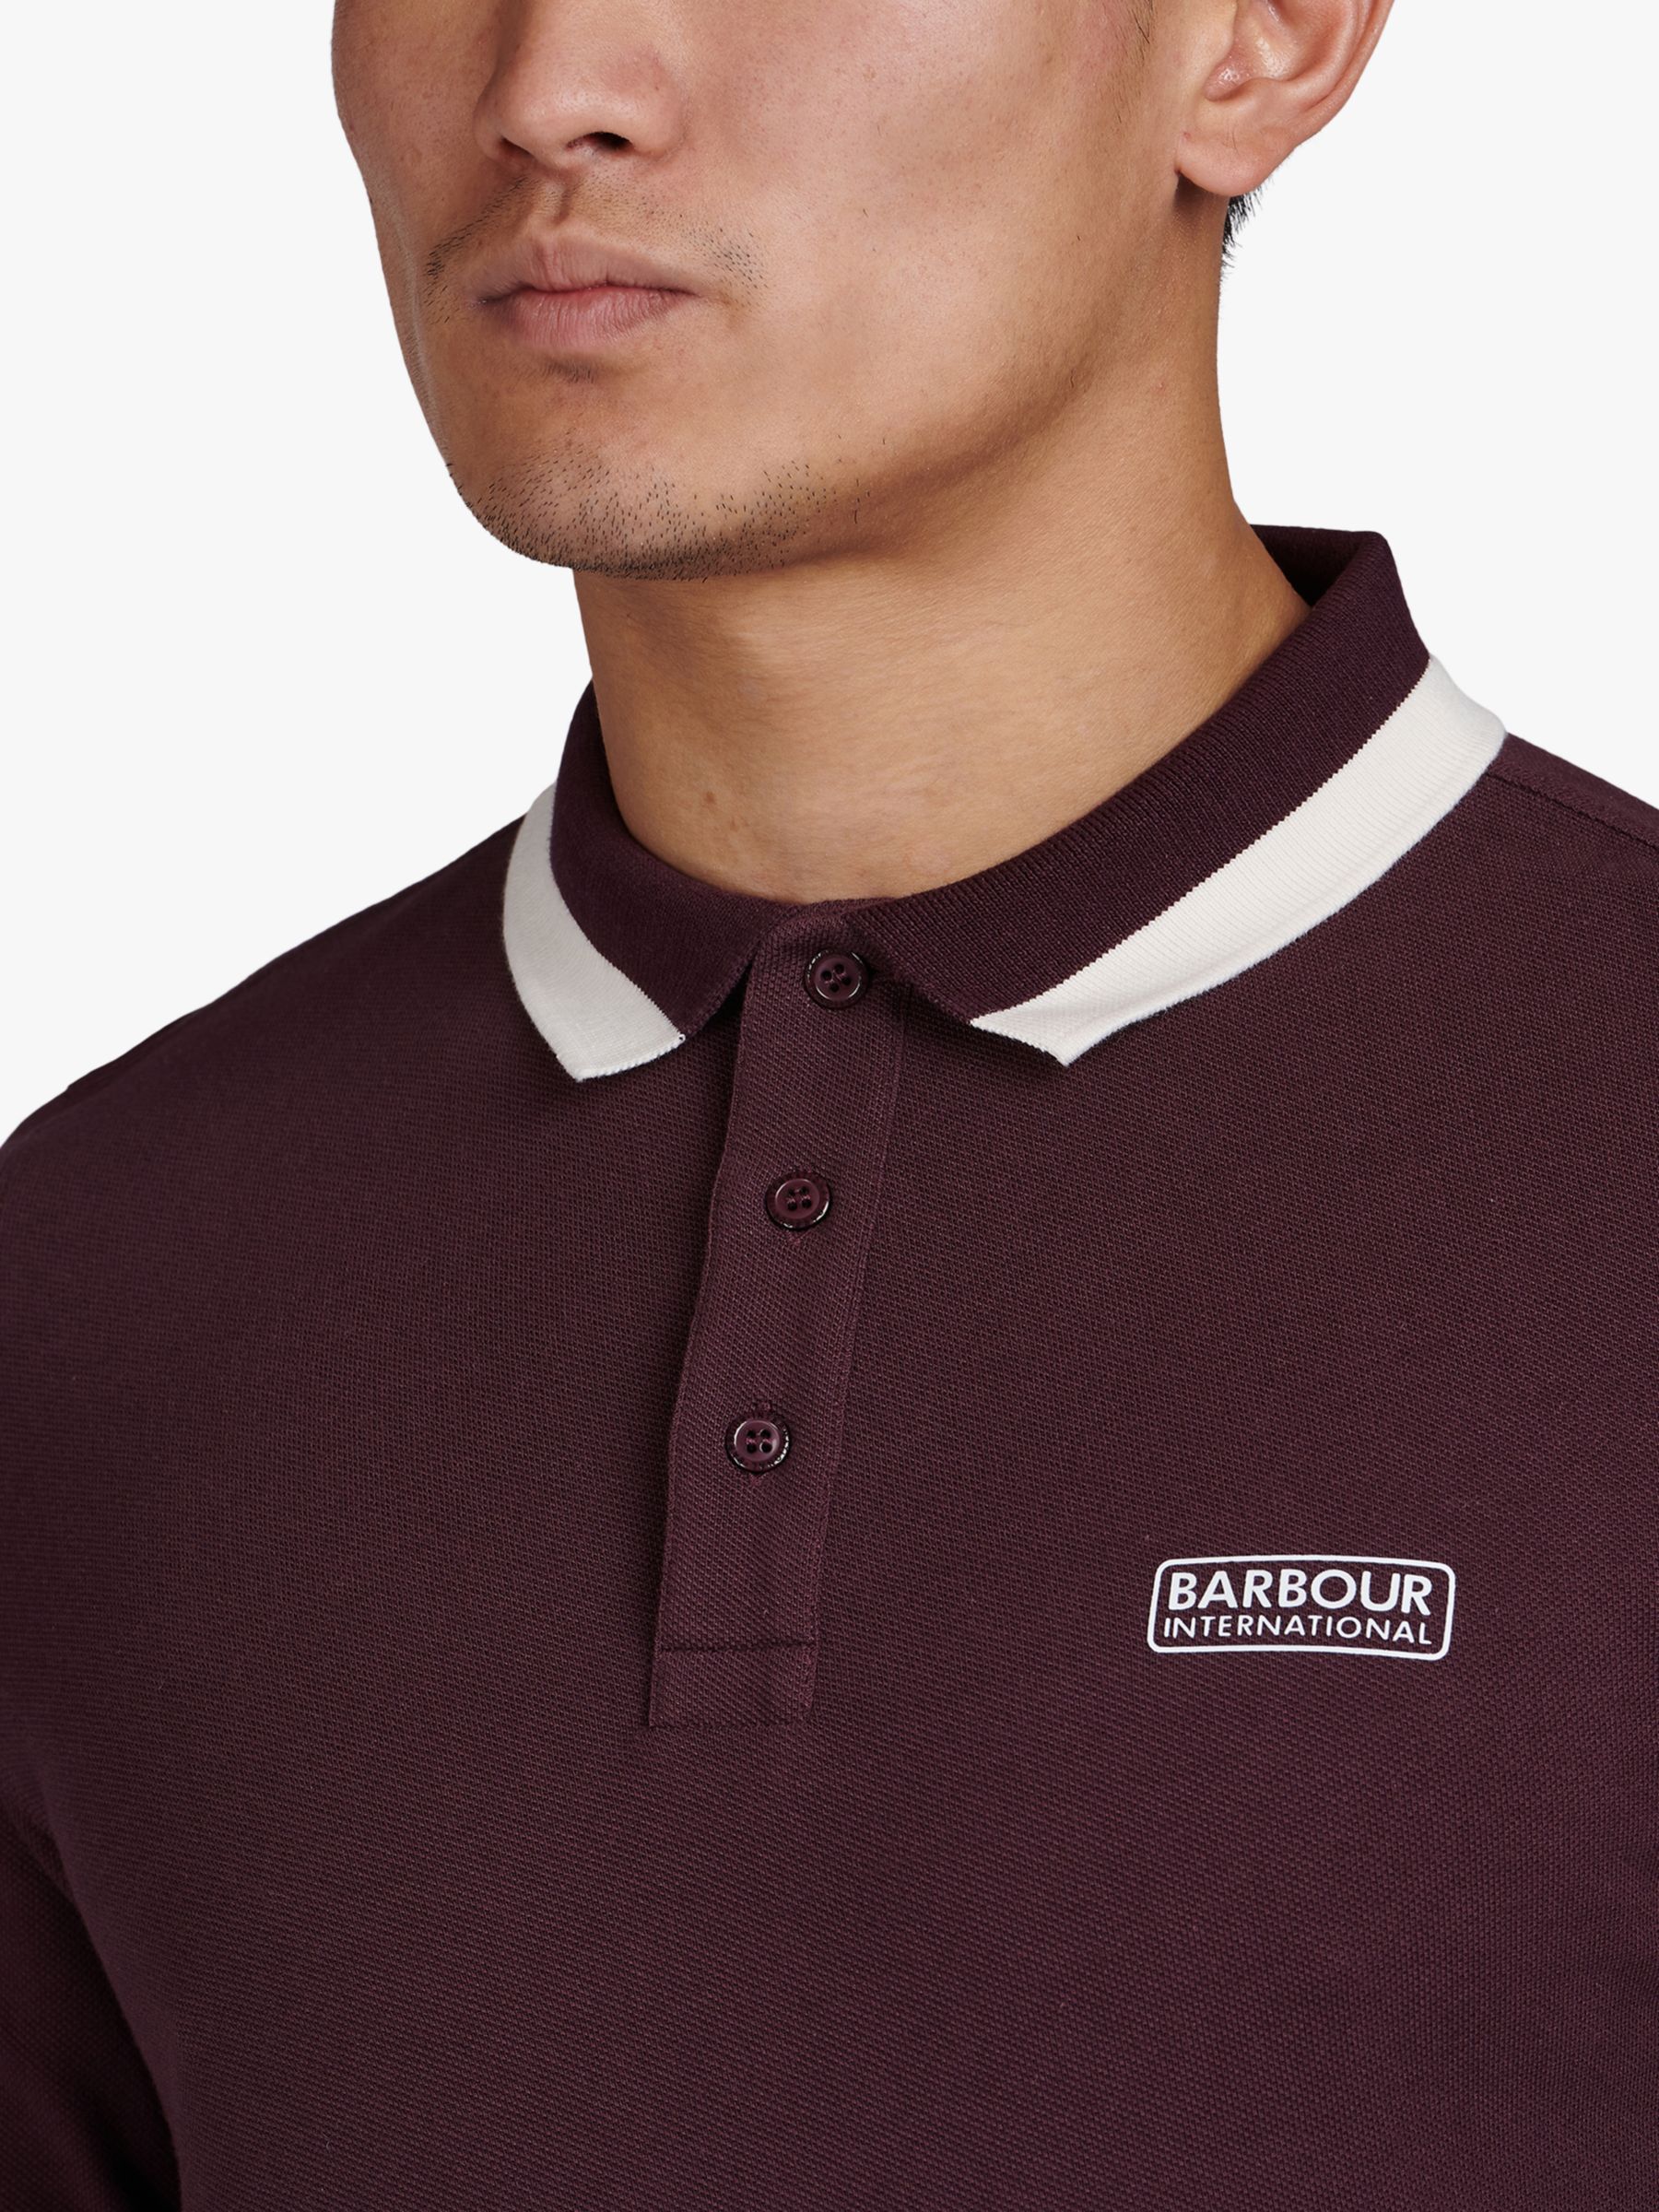 barbour international long sleeve polo shirt